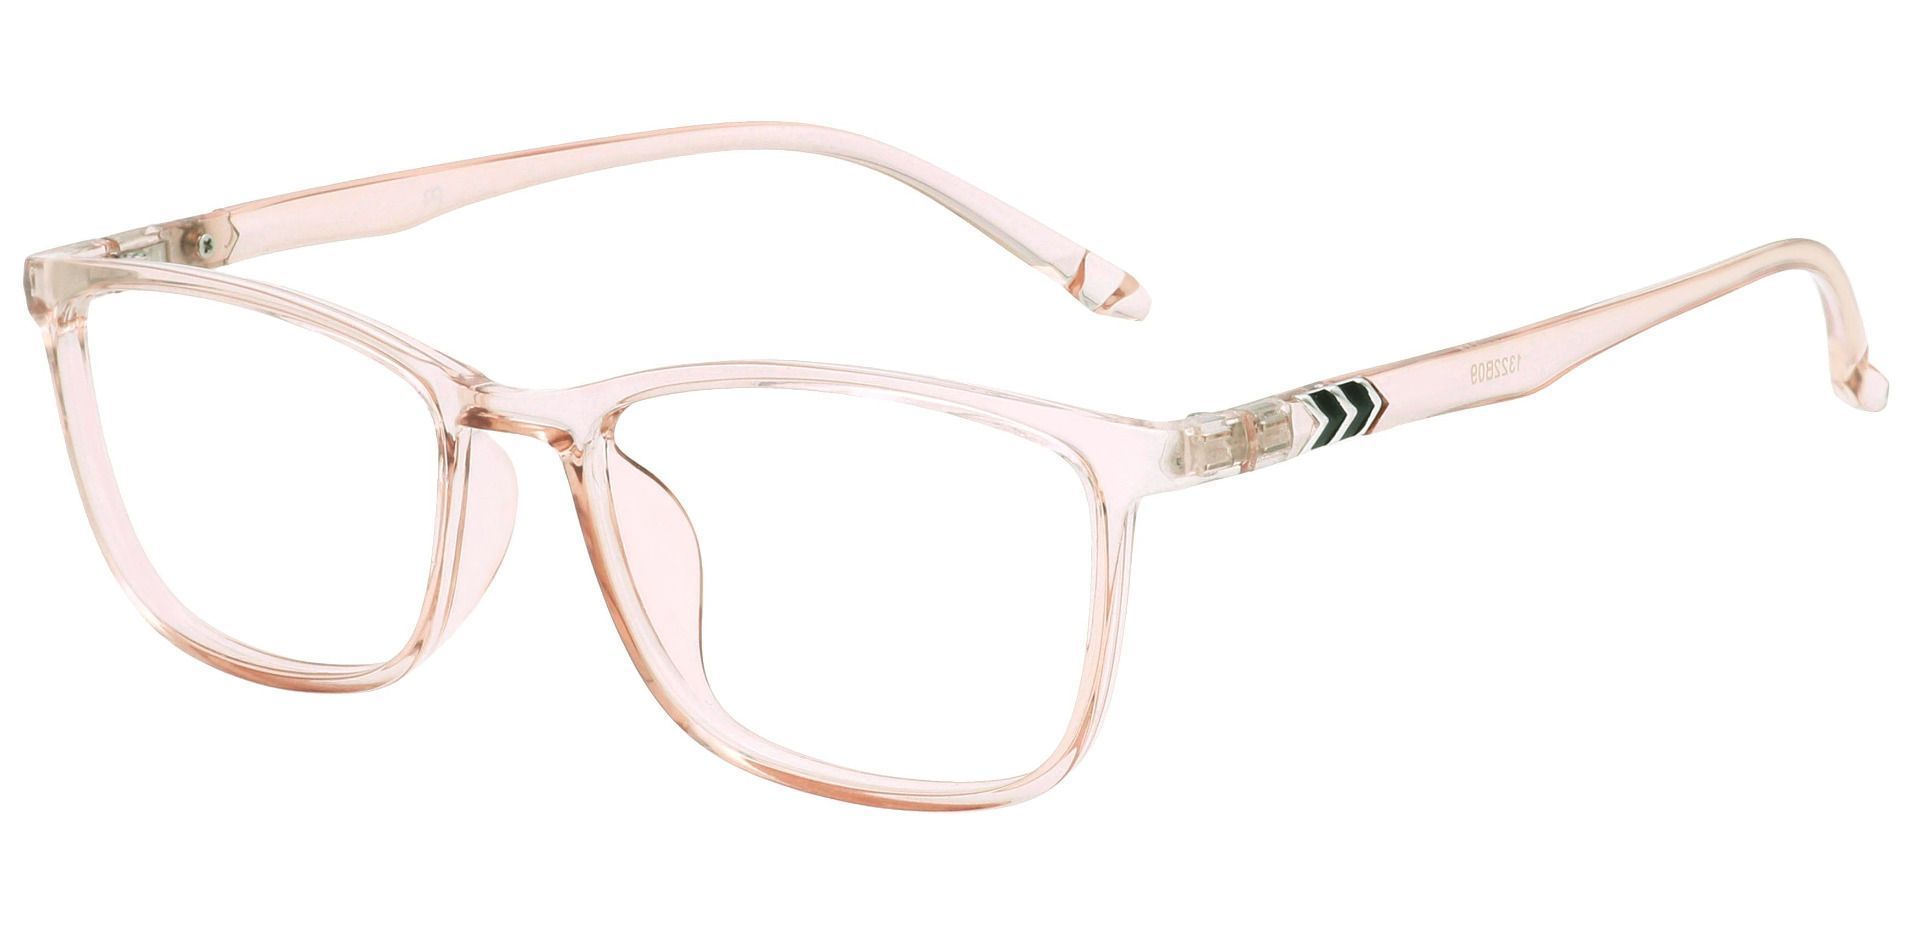 Harvest Rectangle Eyeglasses Frame - Brown